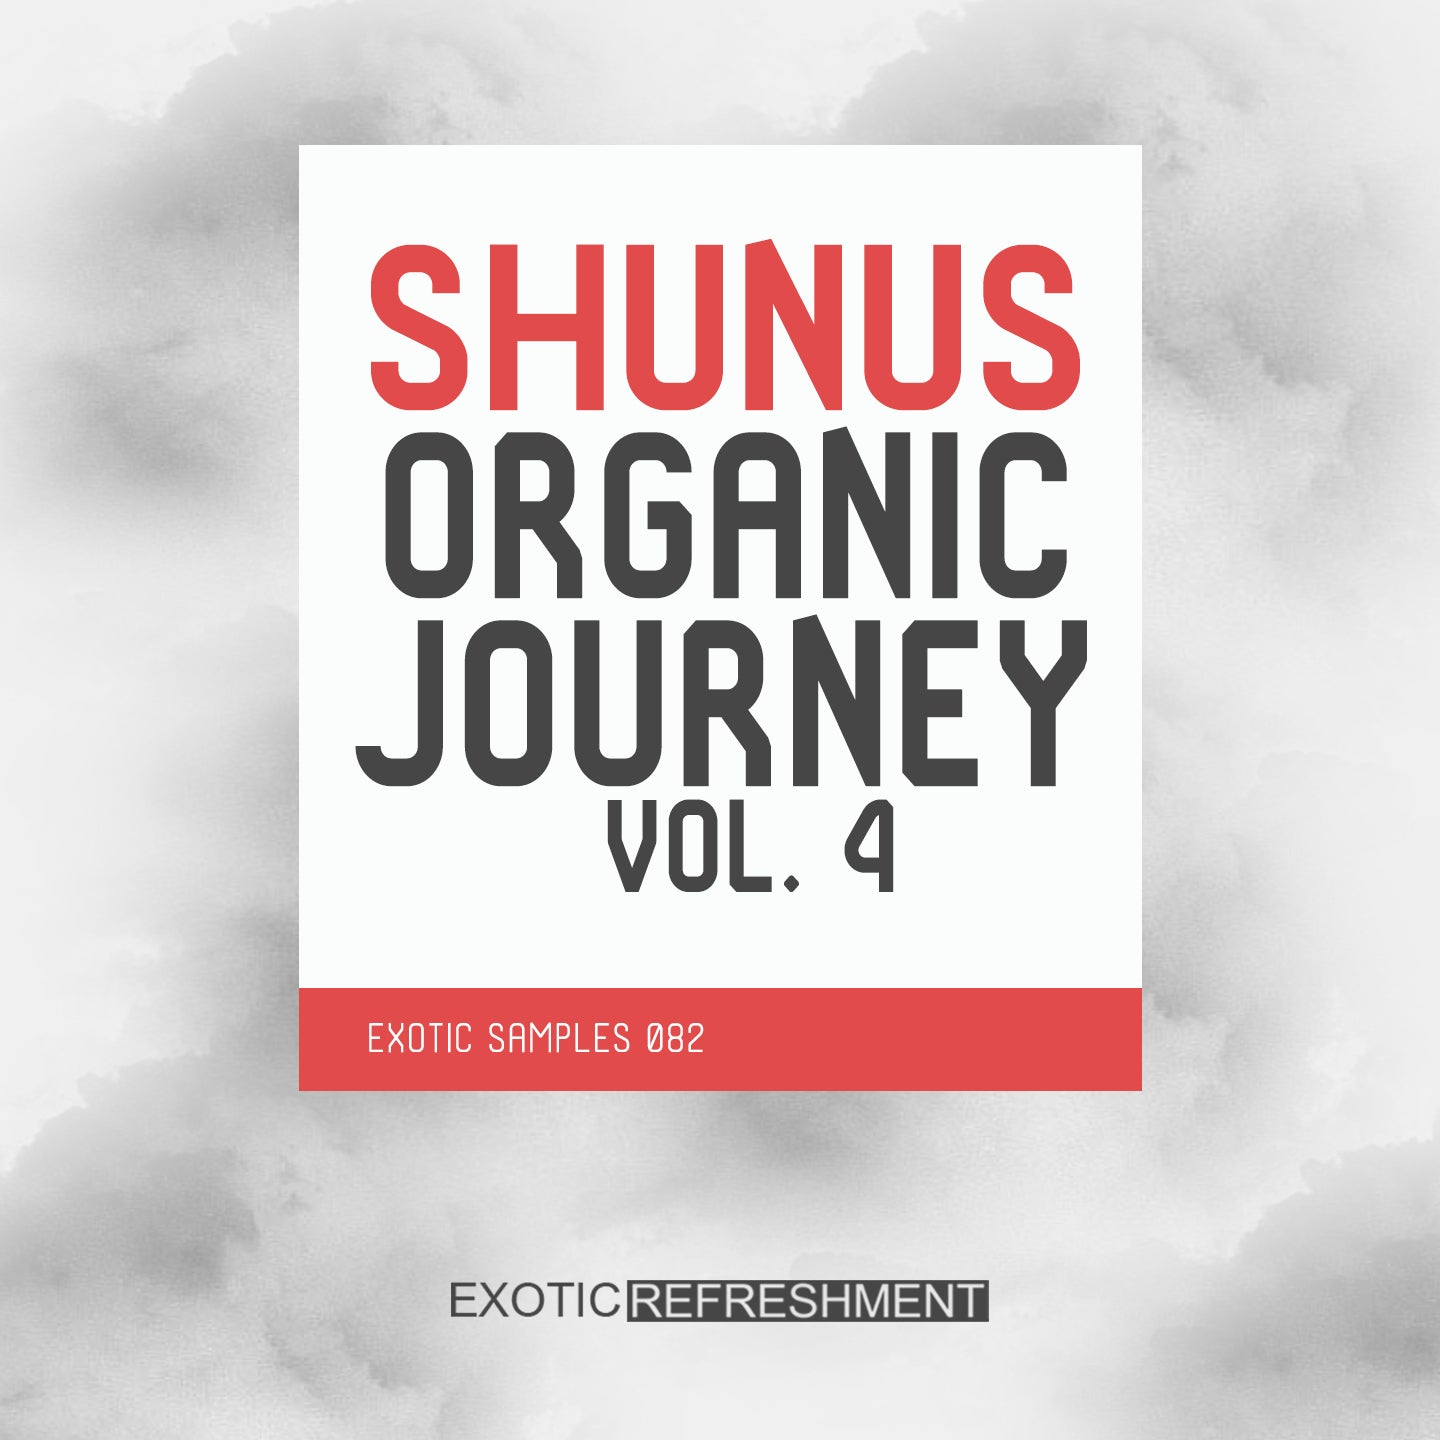 Shunus Organic Journey vol. 4 - Sample Pack